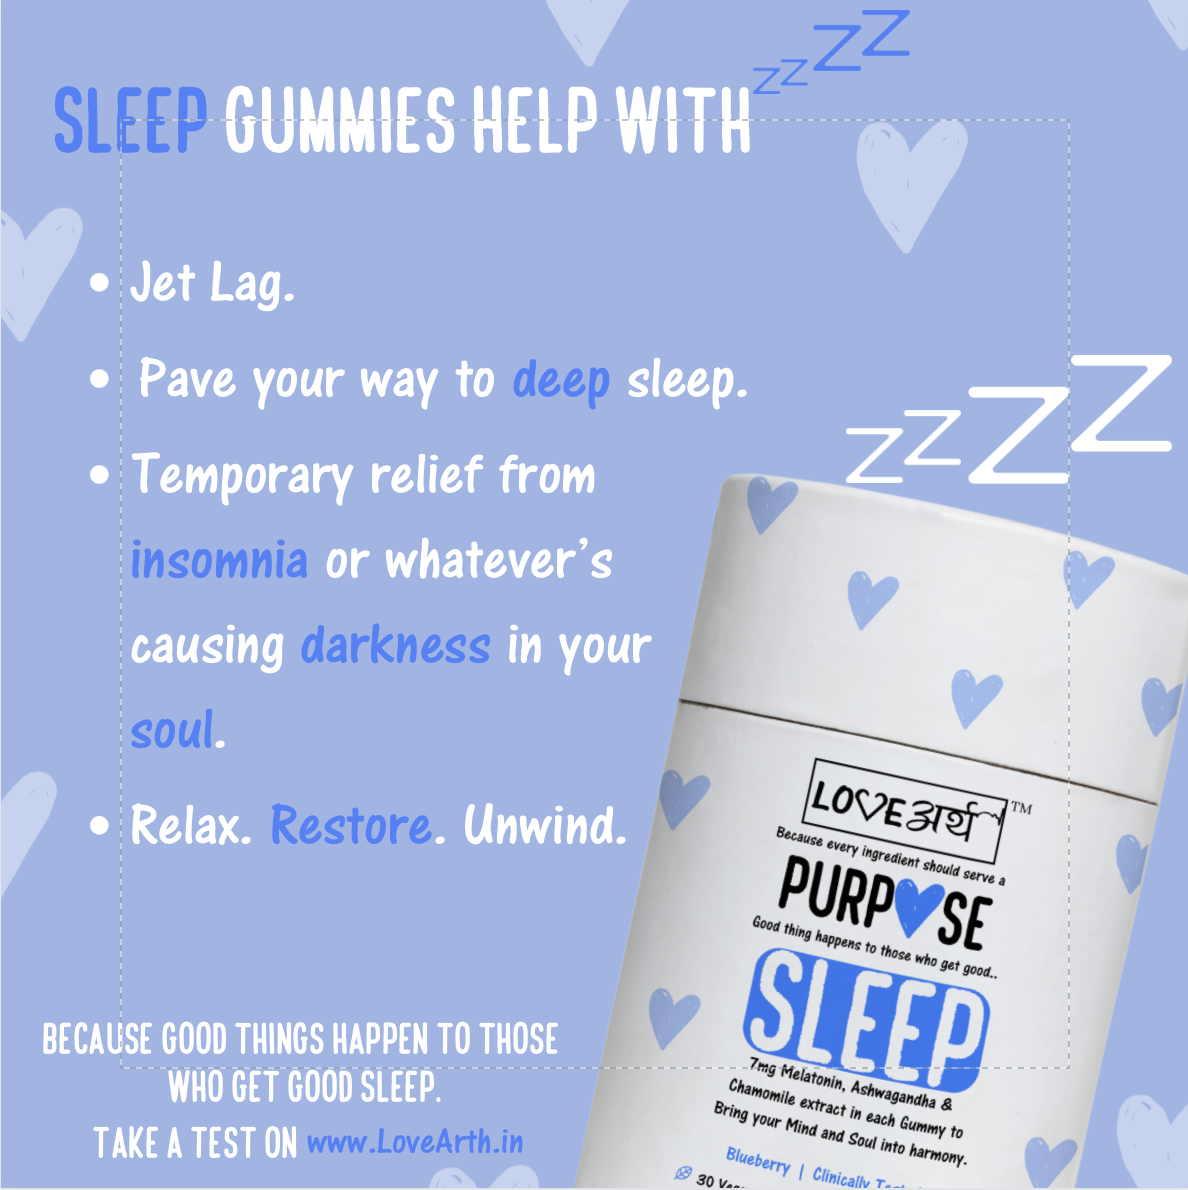 Sleep Gummies help with 